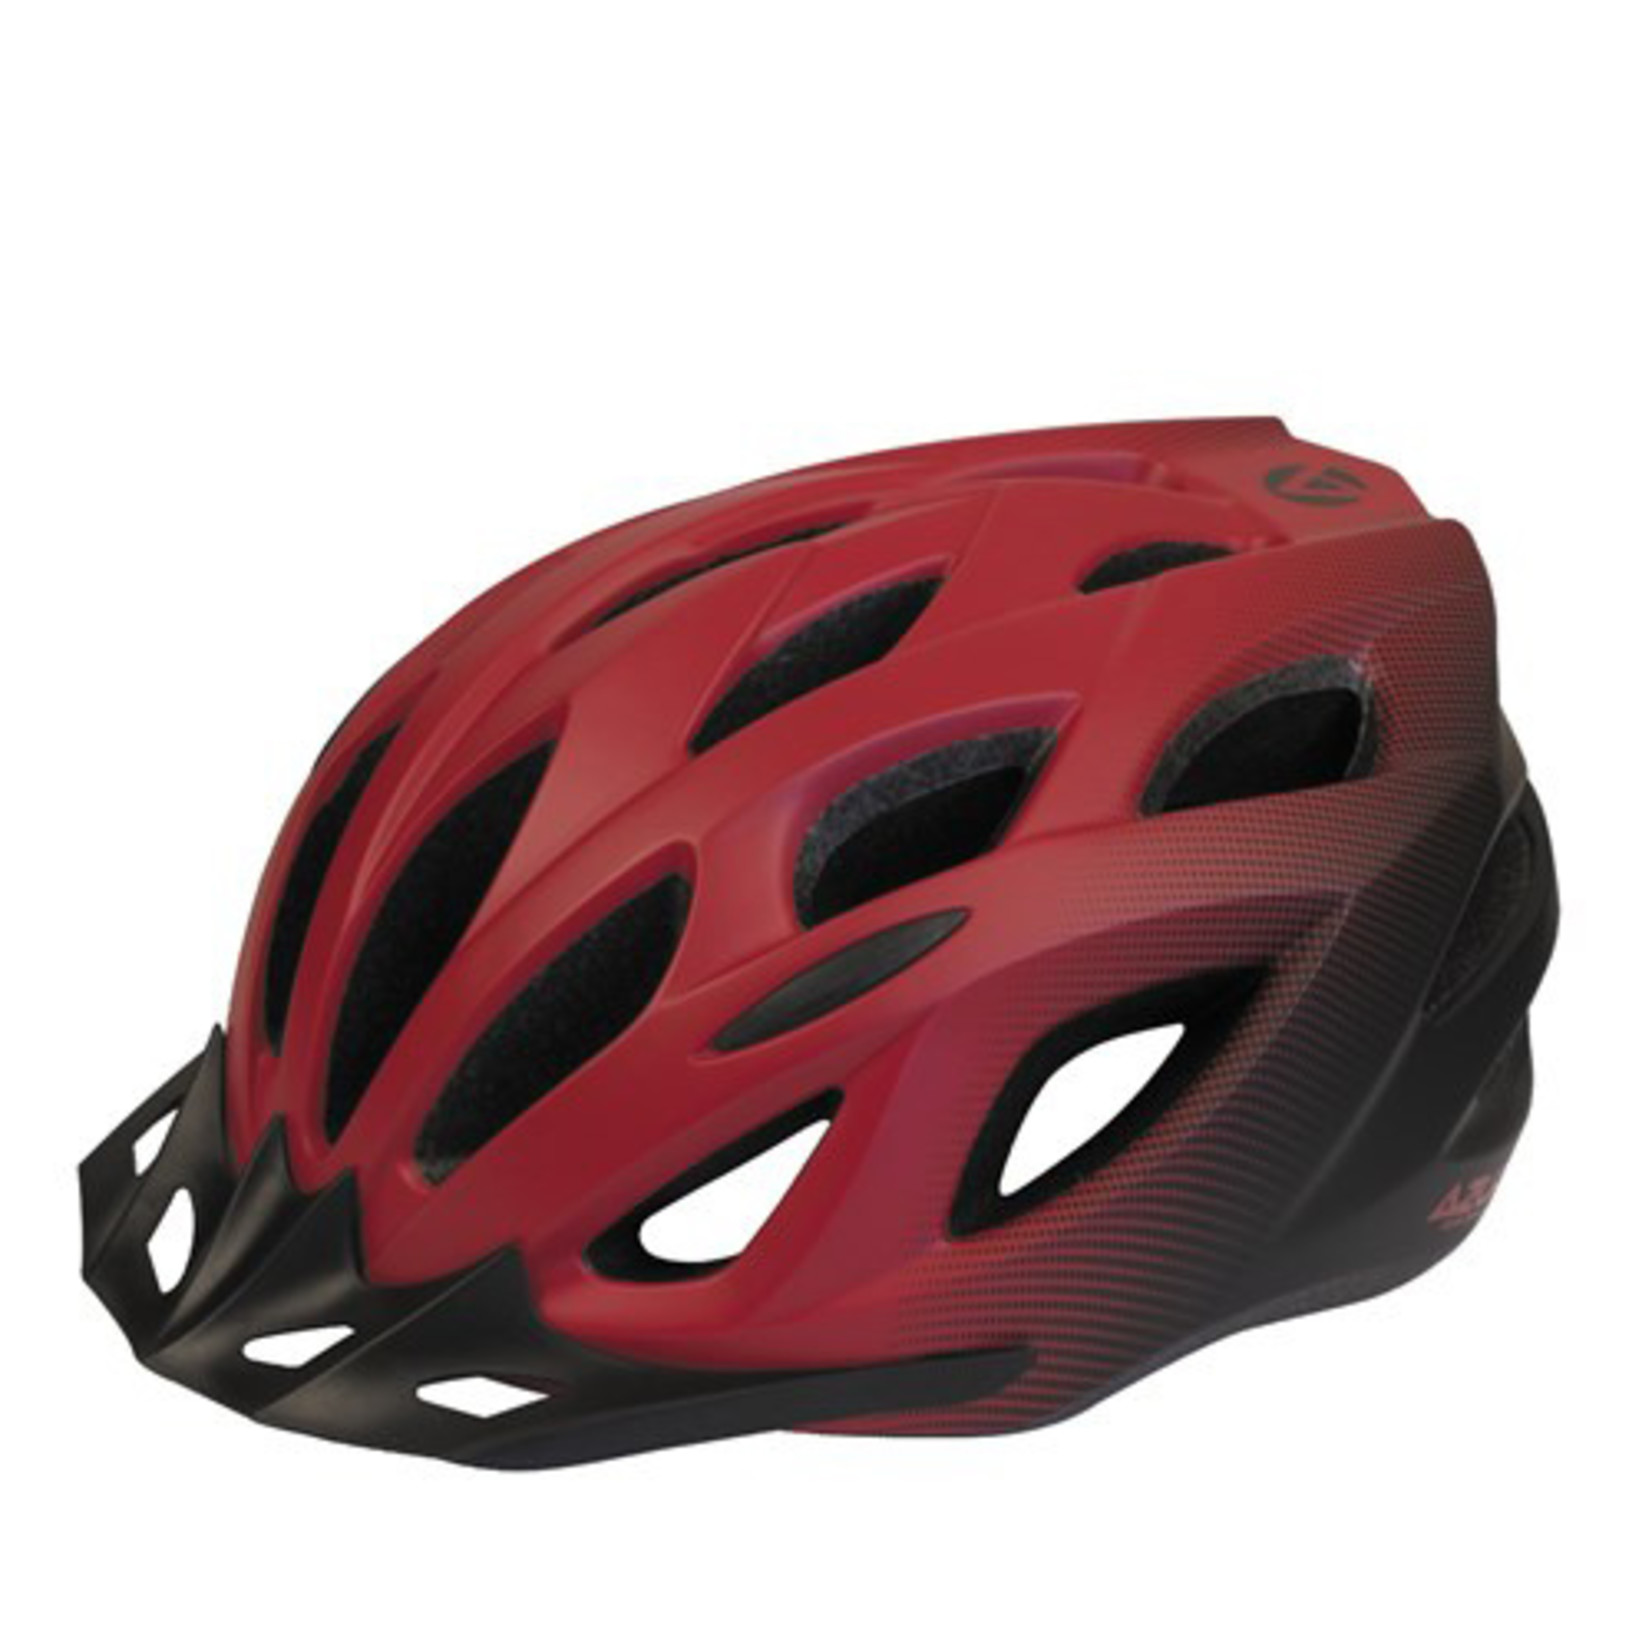 Azur Azur Bike Helmet - L61 Series - Satin Red/Black Fade Lightweight in-Mould shell